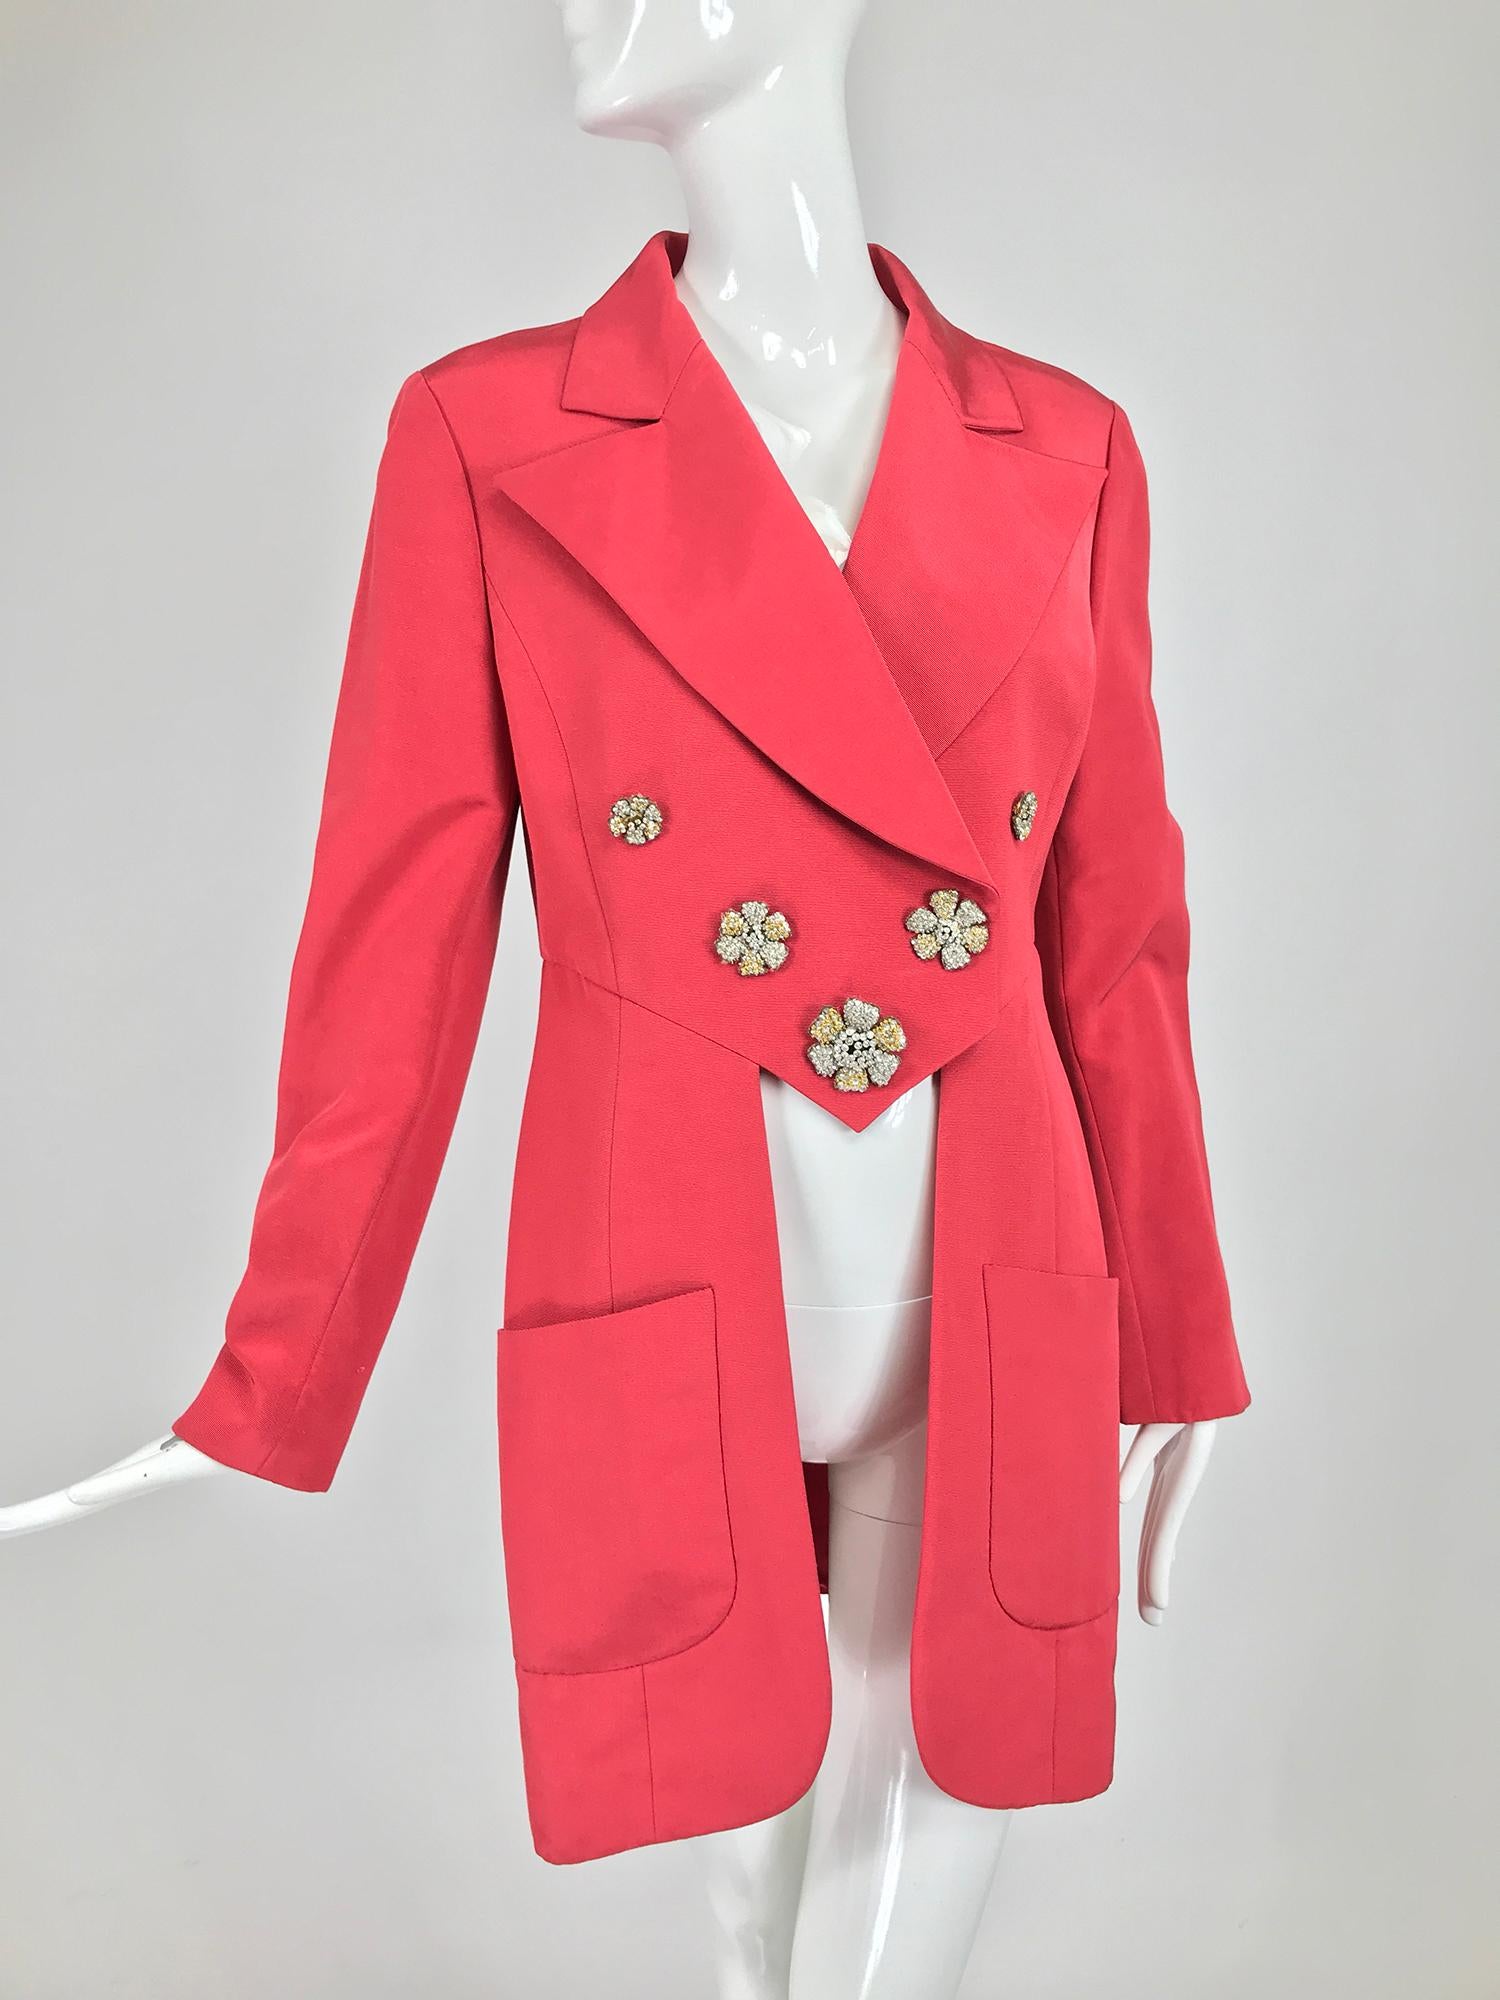 Karl Lagerfeld Coral Red Silk Faille Reddingote Style Coat 1990s 2